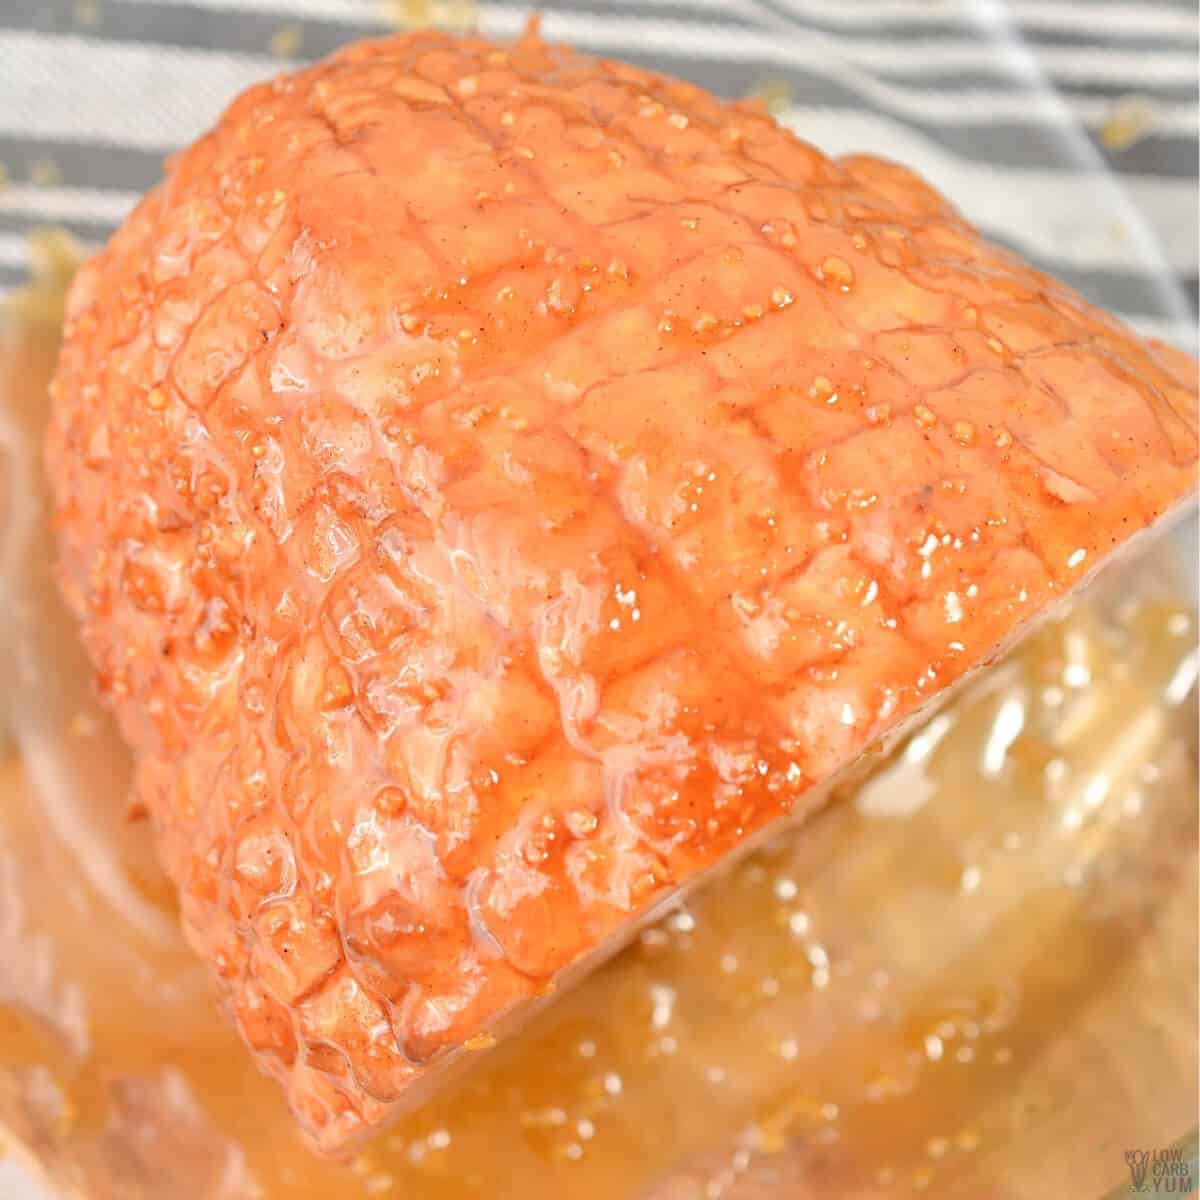 glazed ham in pan before baking